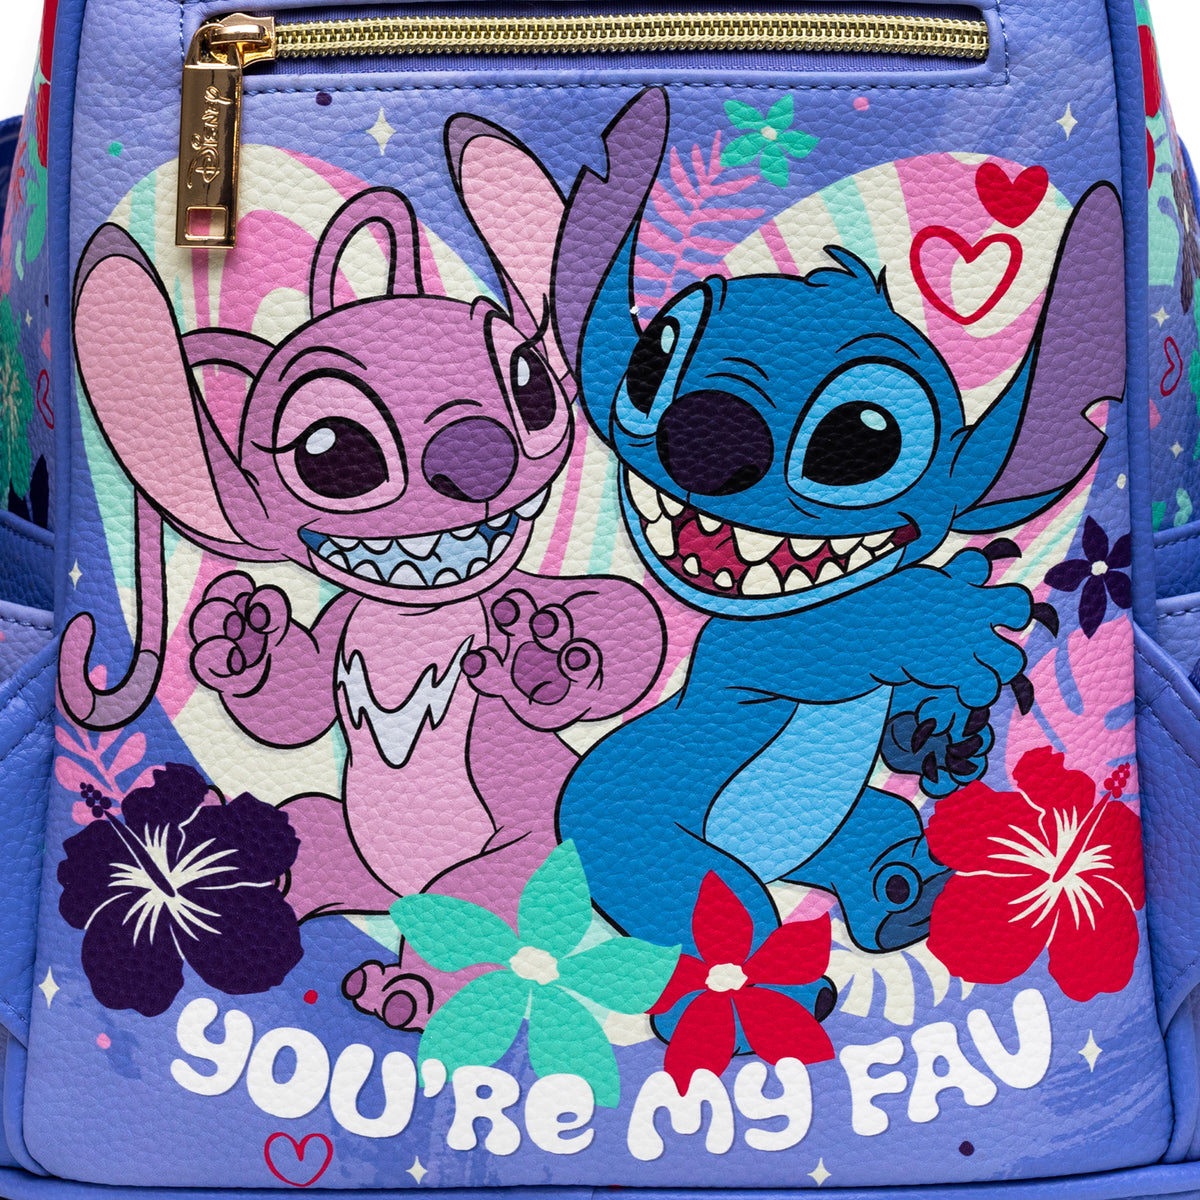 Disney Stitch Mini Backpack - Limited Edition